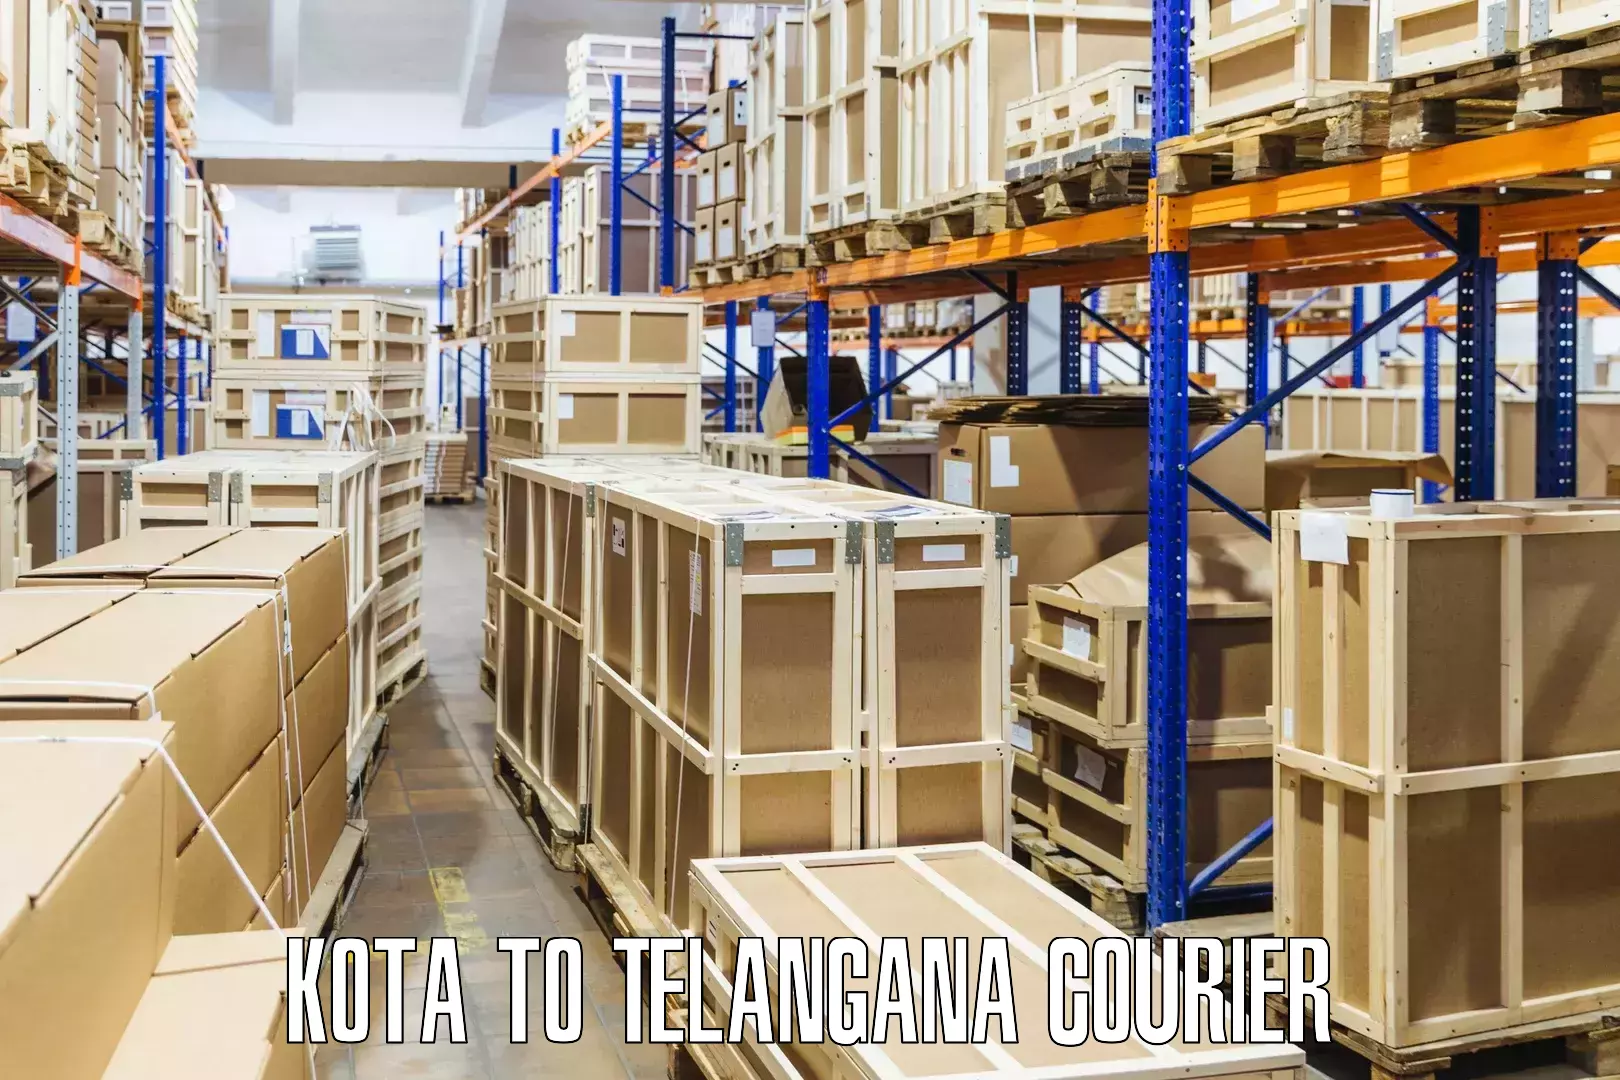 Nationwide parcel services Kota to Telangana